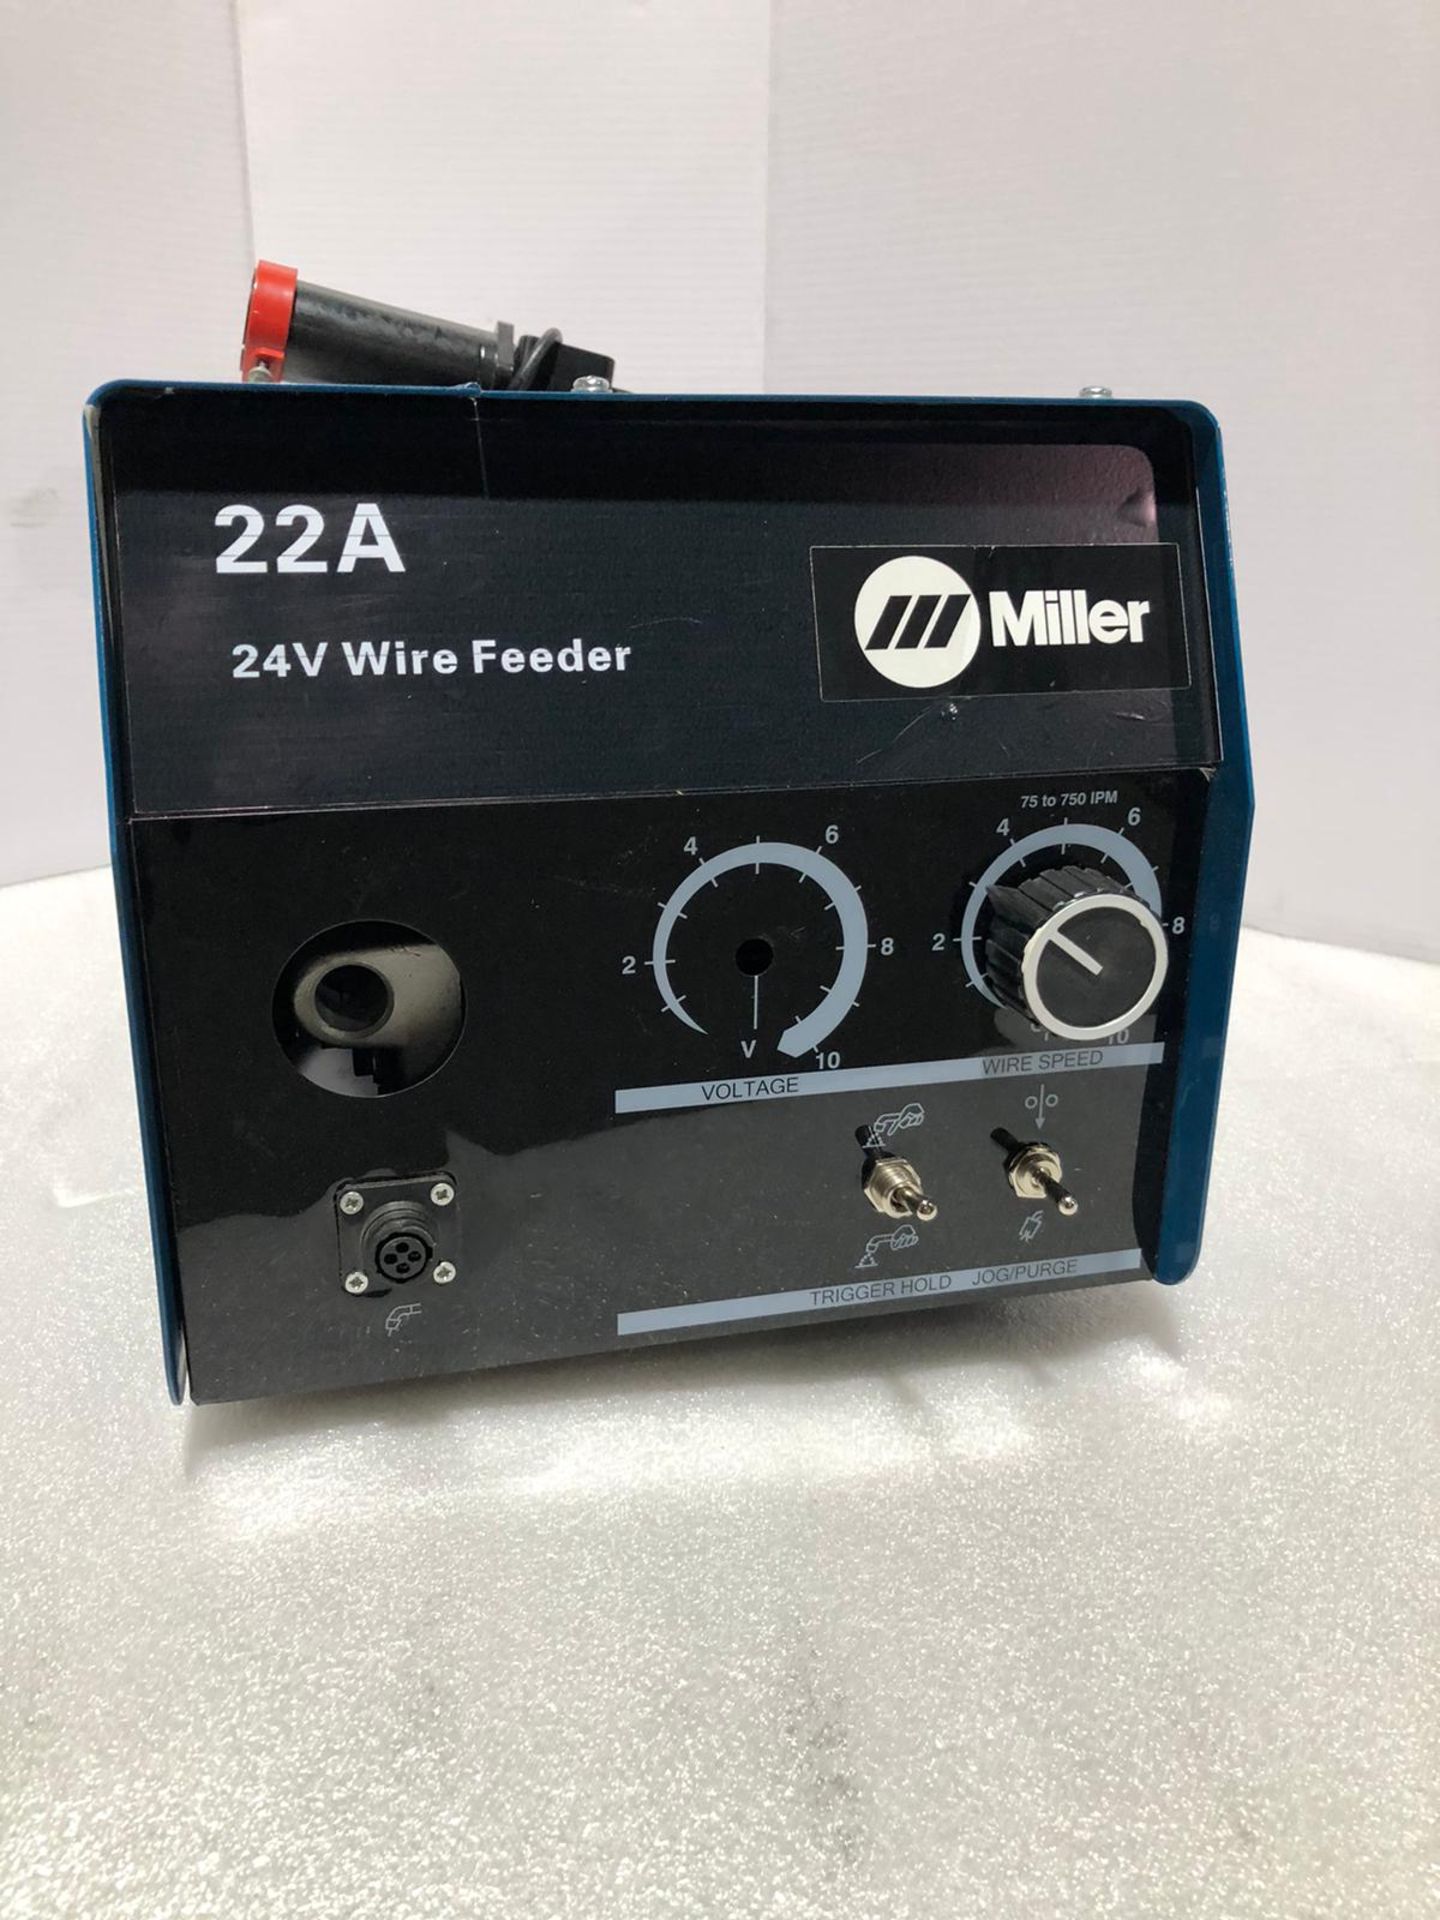 NEW Miller Model 22A Welding Wire Feeder - MINT 24V Unit - Image 3 of 3